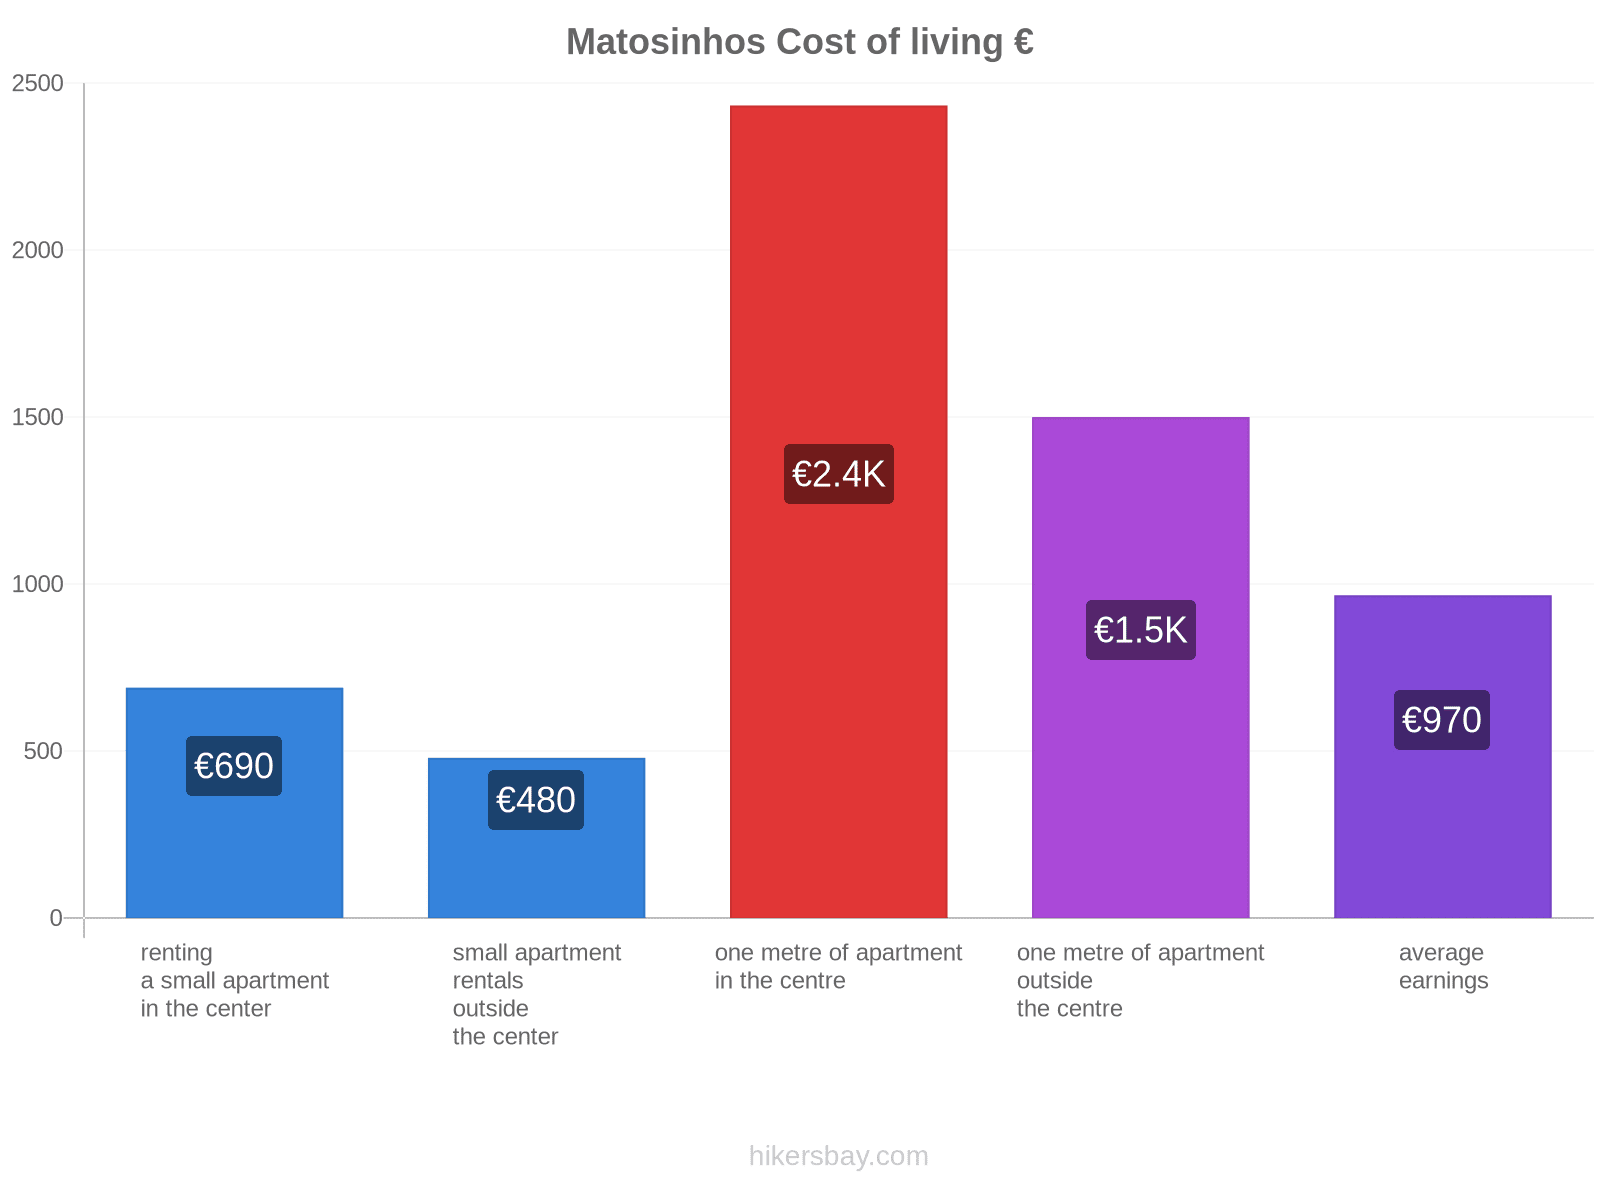 Matosinhos cost of living hikersbay.com